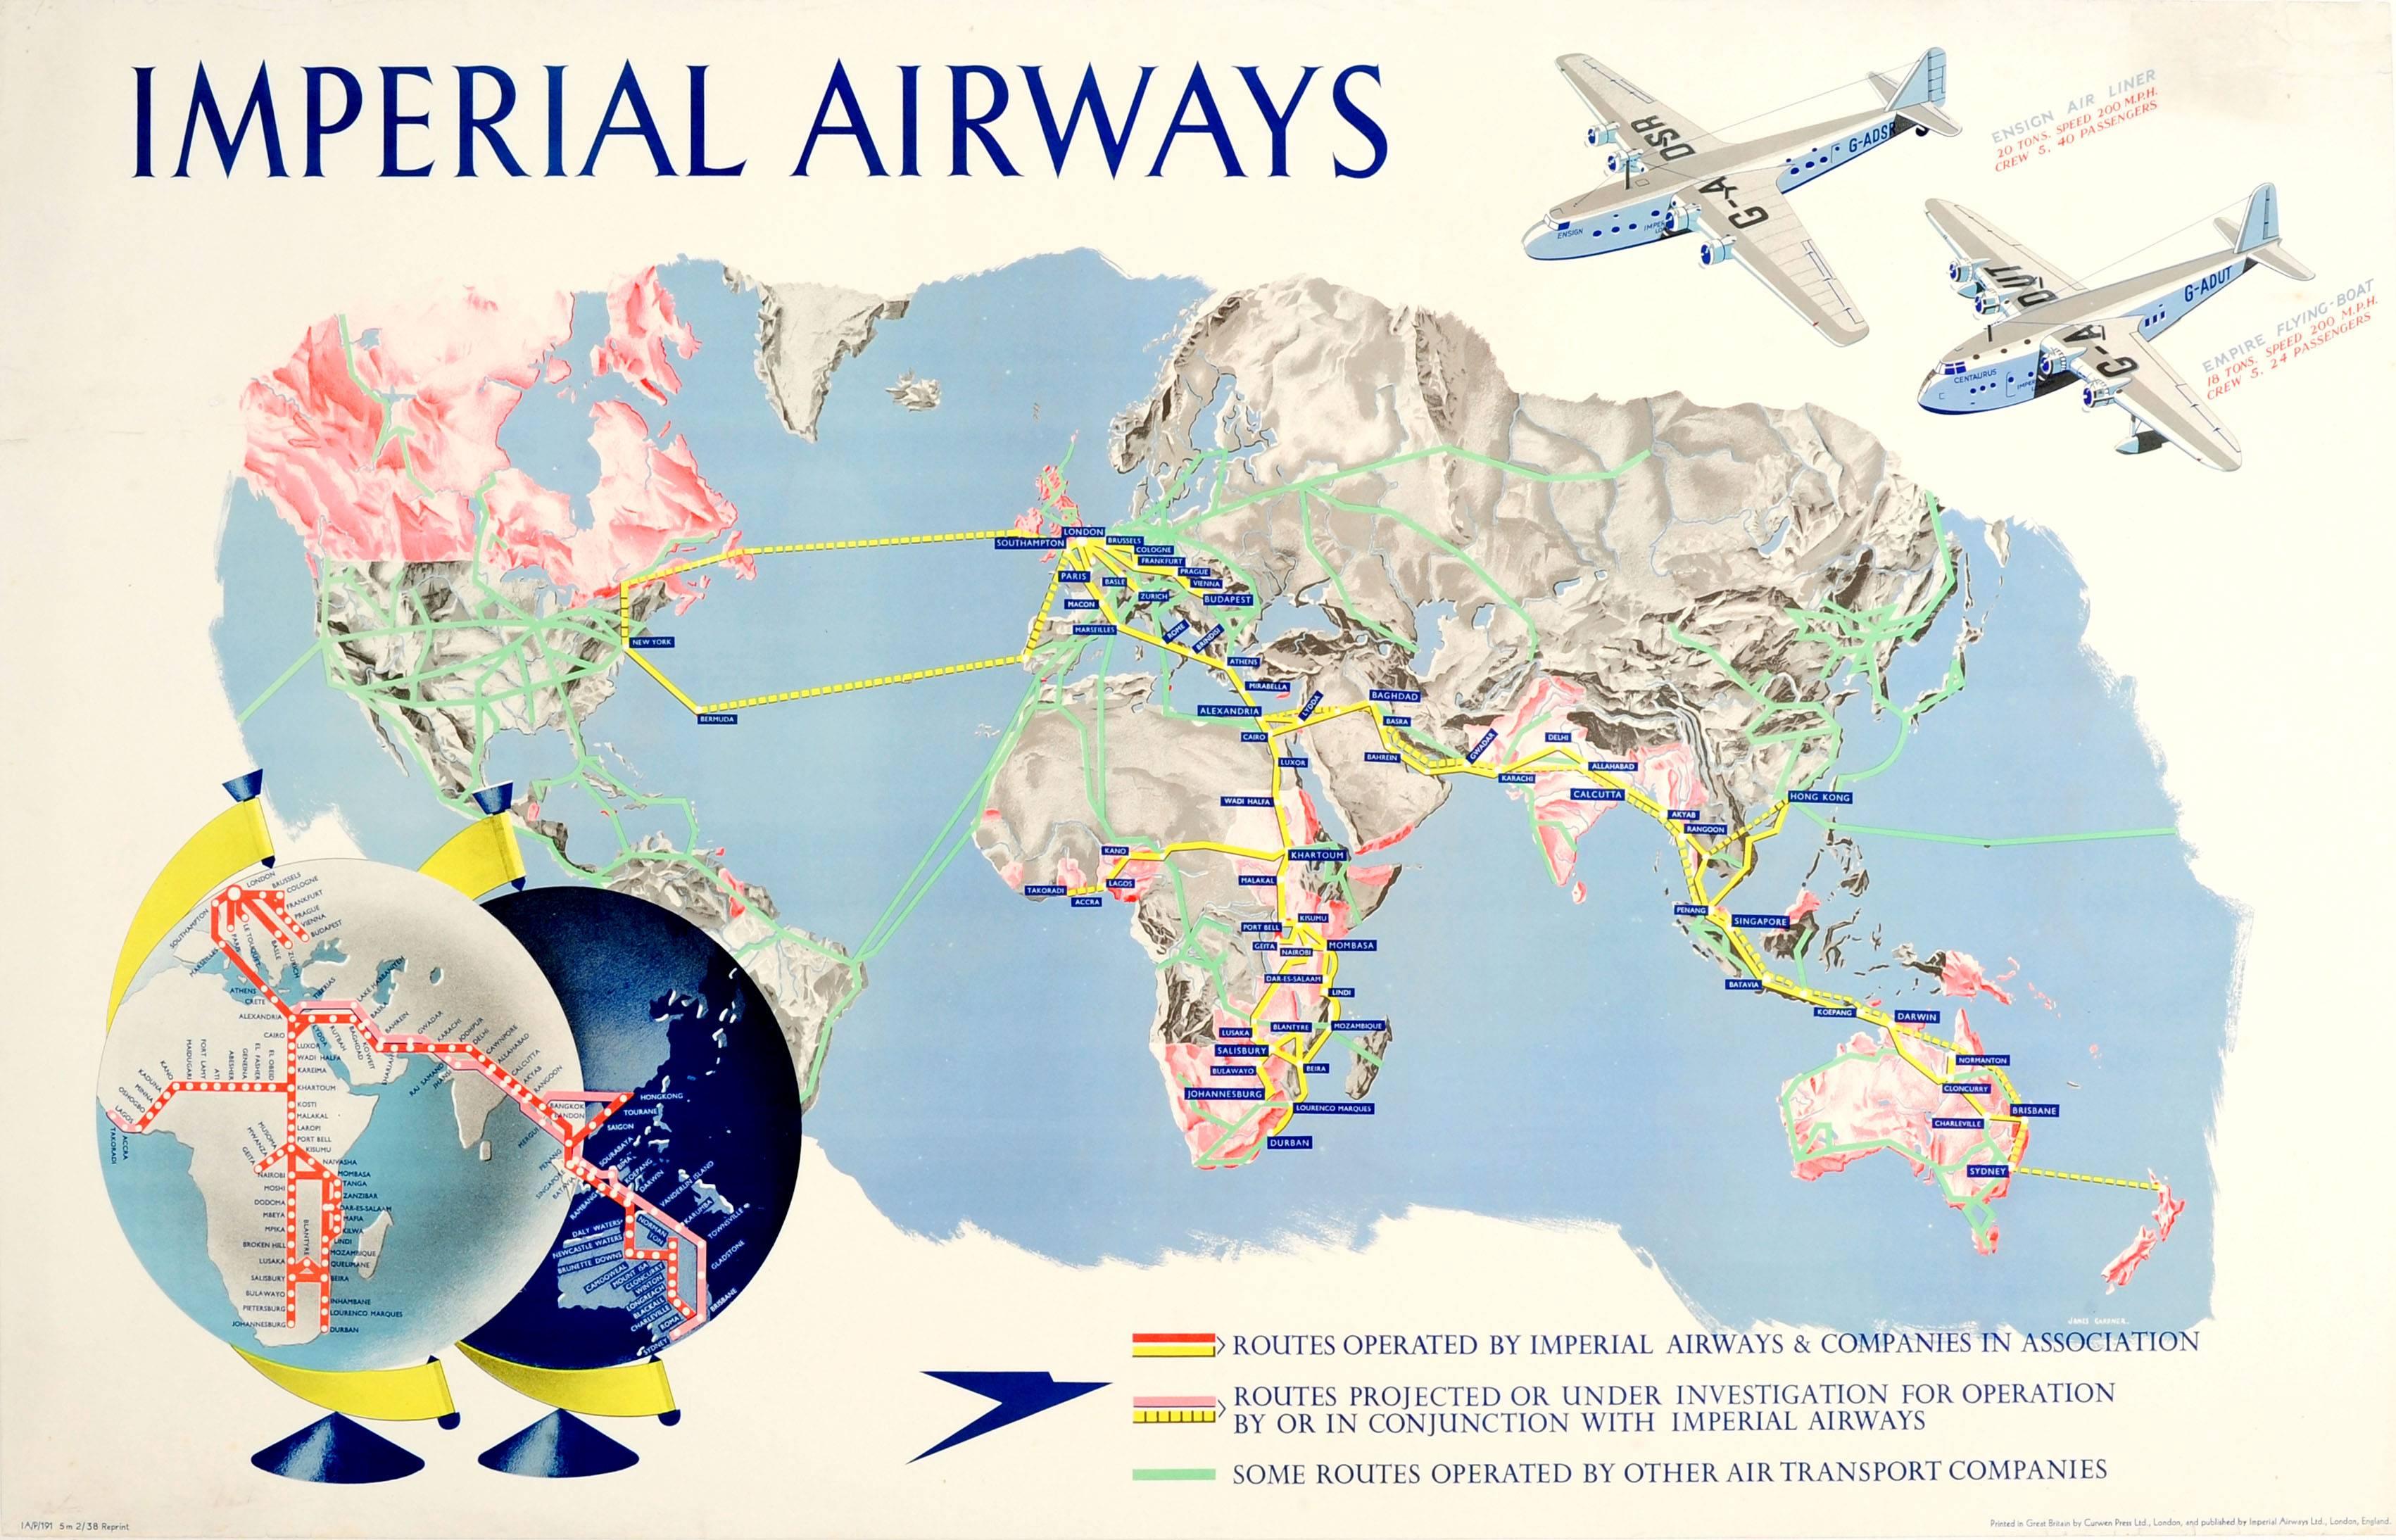 James Gardner Print - Original 1938 Imperial Airways Travel Advertising Poster - Speedbird Route Map